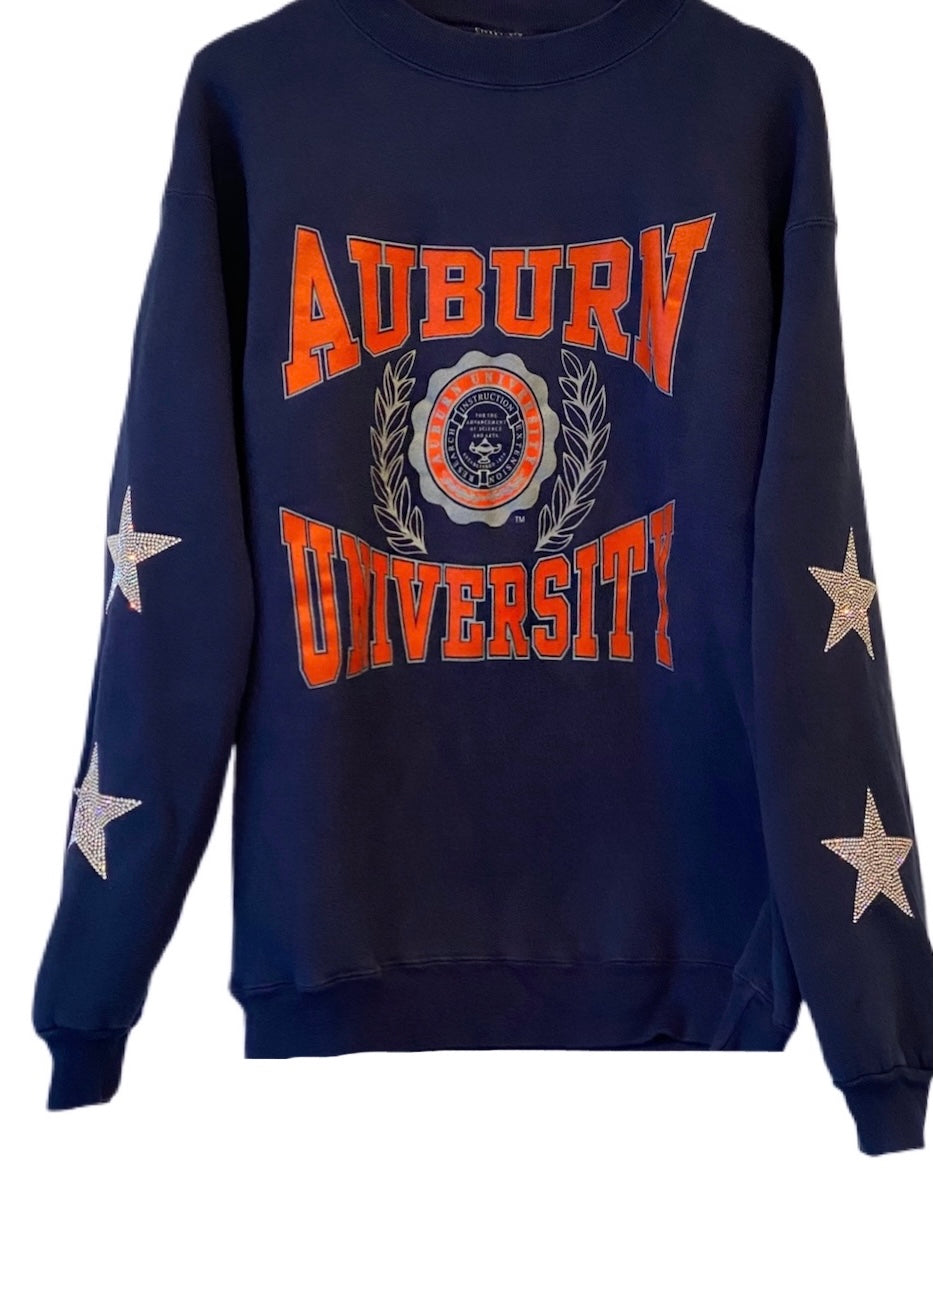 Auburn University, Tigers One of a KIND Vintage Sweatshirt with Crystal Star Design